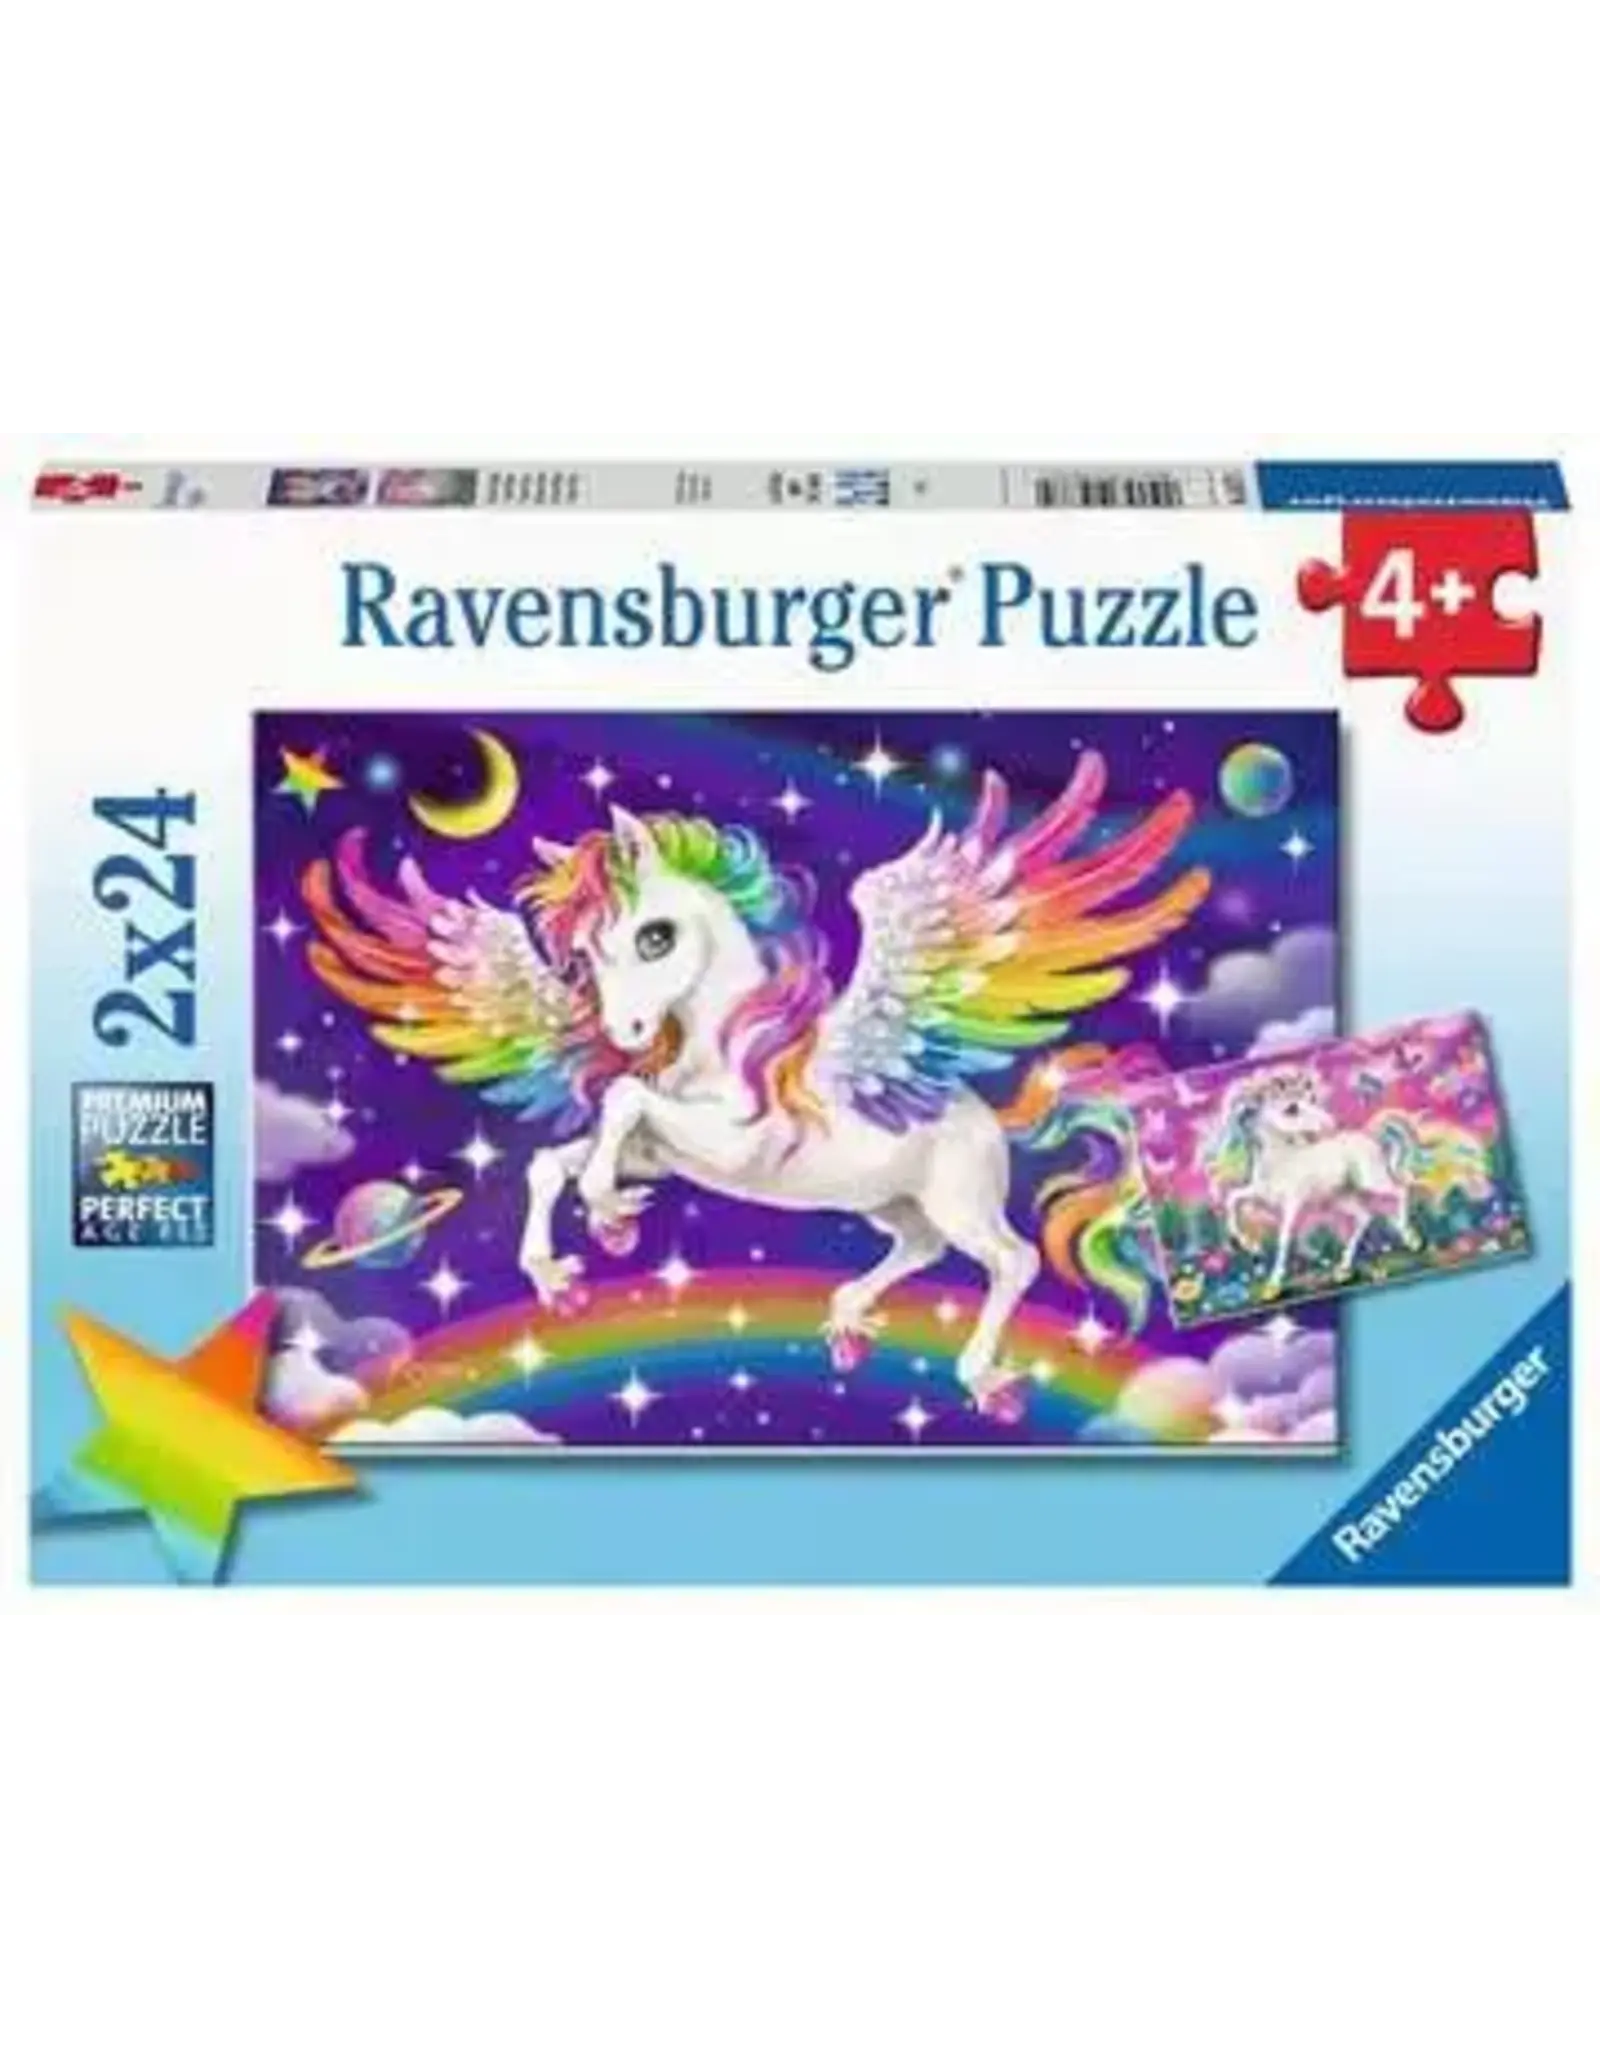 Ravensburger Unicorns & Pegasus 2x24 Piece Puzzle